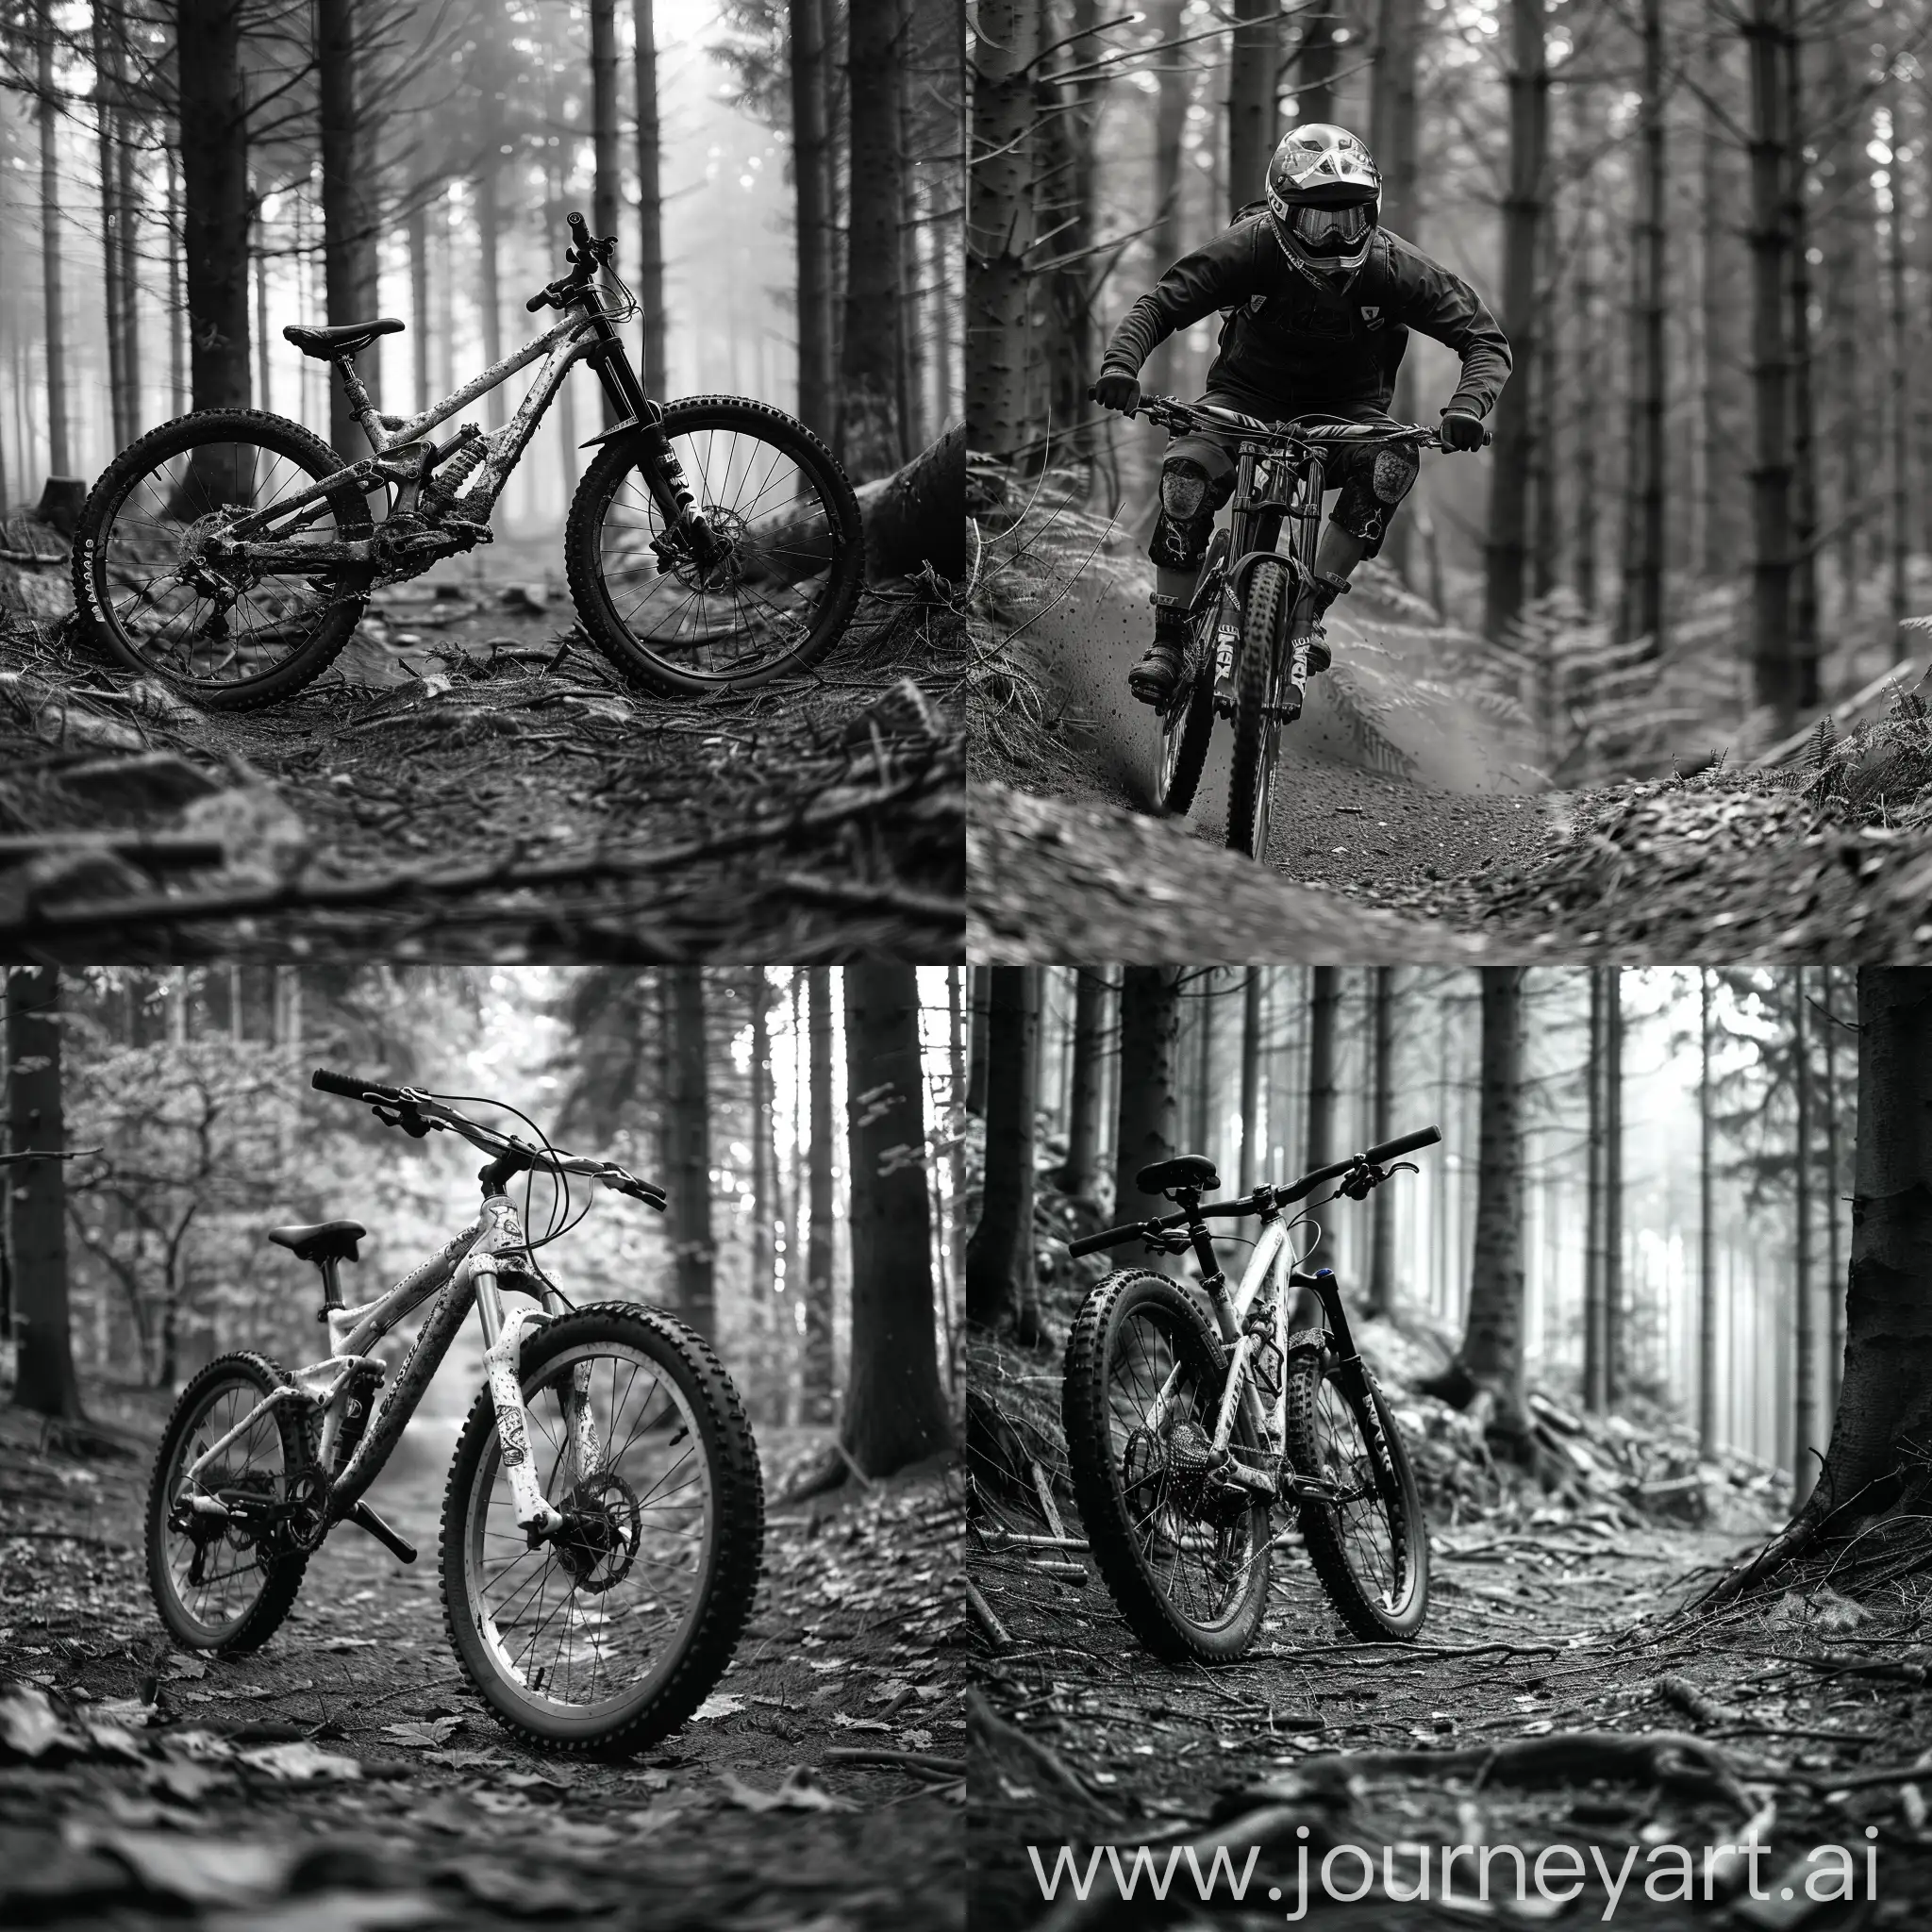 Forest-Trail-Bike-Shredding-Monochrome-Adventure-Turn